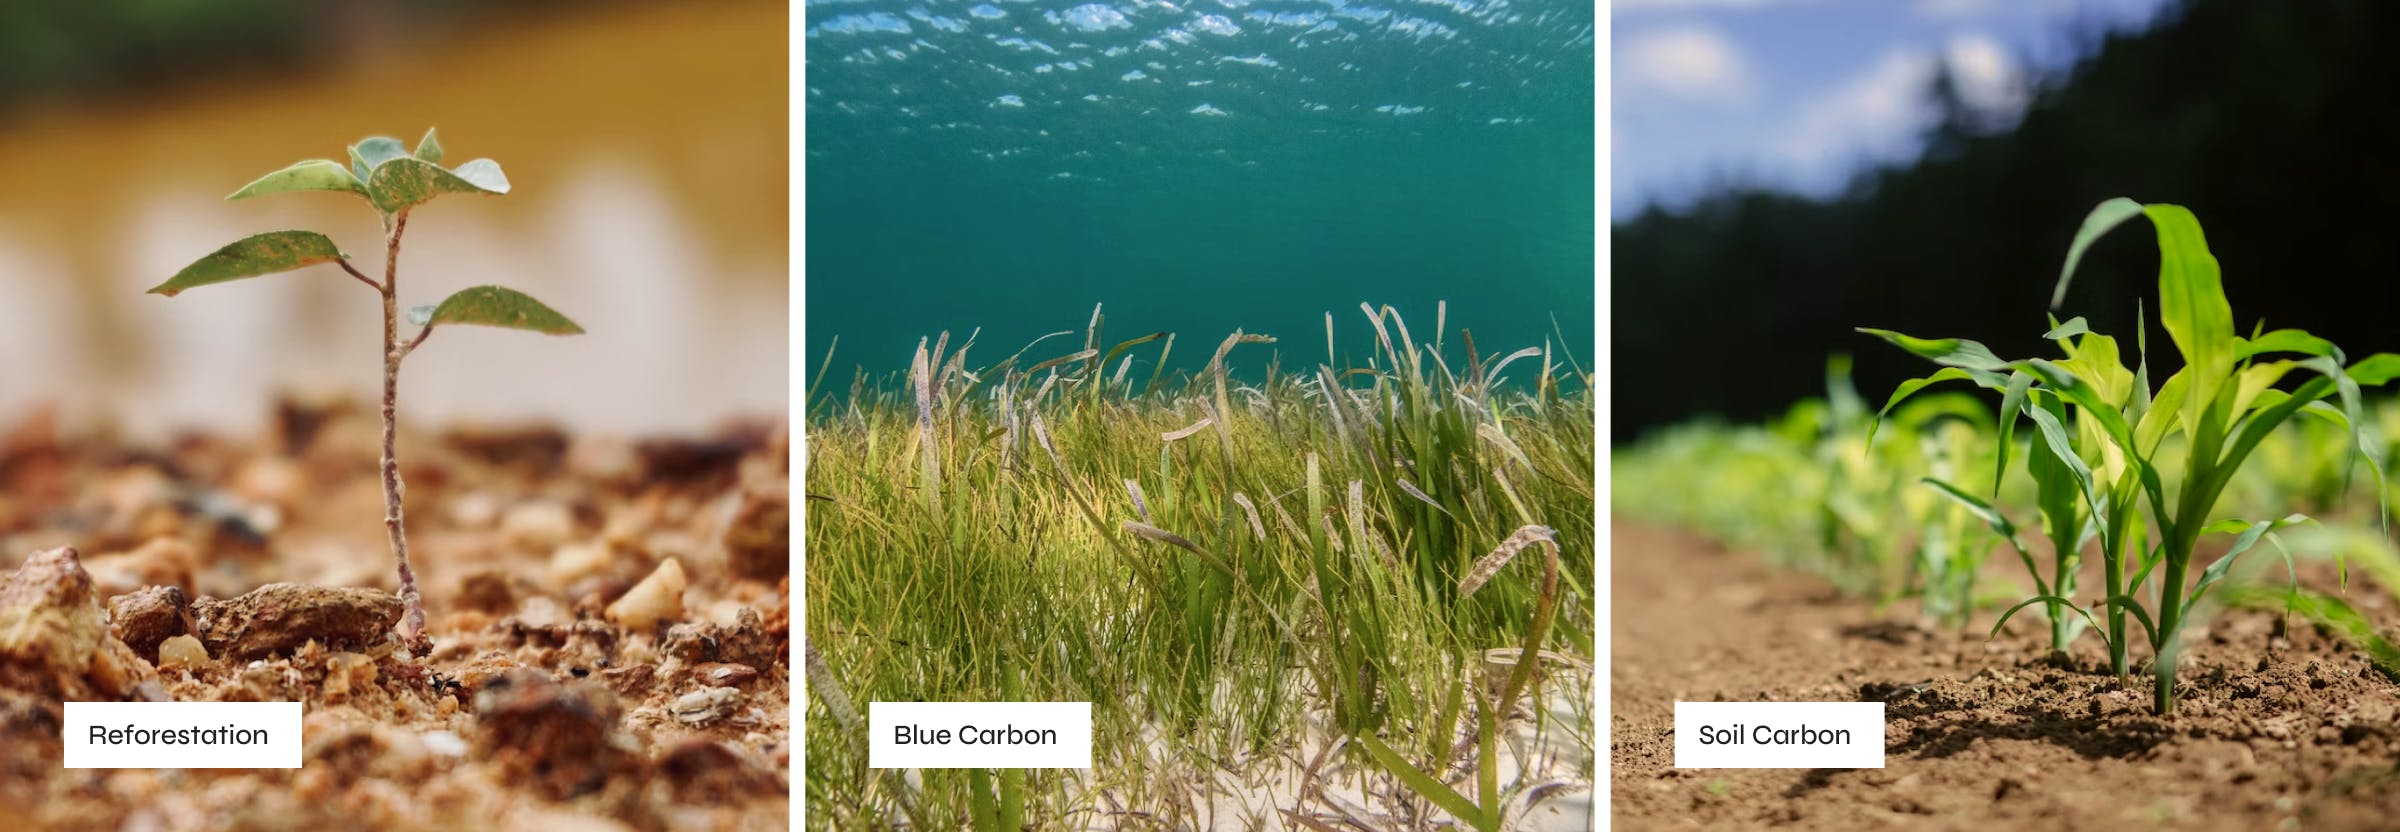 Series of 3 photos showing: reforestation, blue carbon, soil carbon